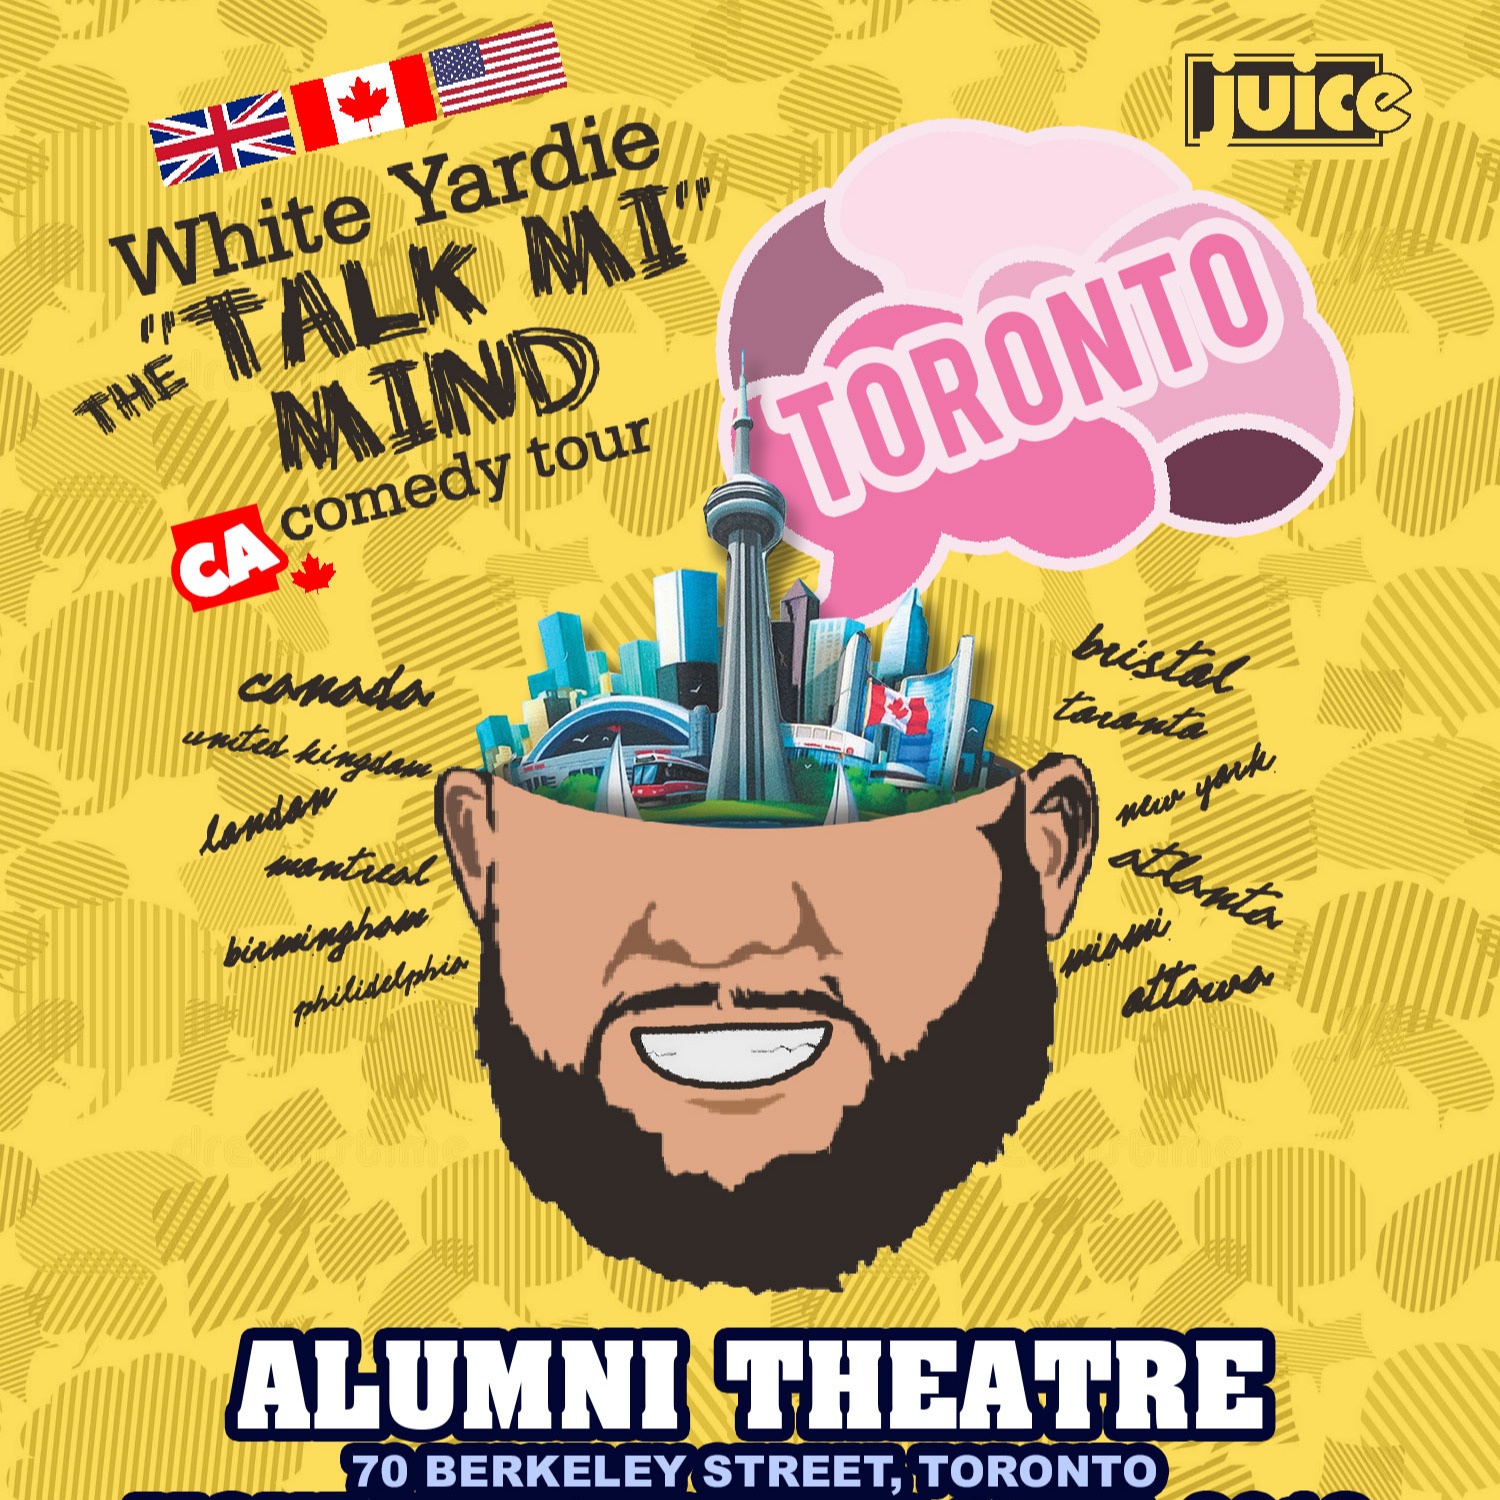 Toronto (early) - Juice Comedy Presents White Yardie's 'talk Mi Mind' 